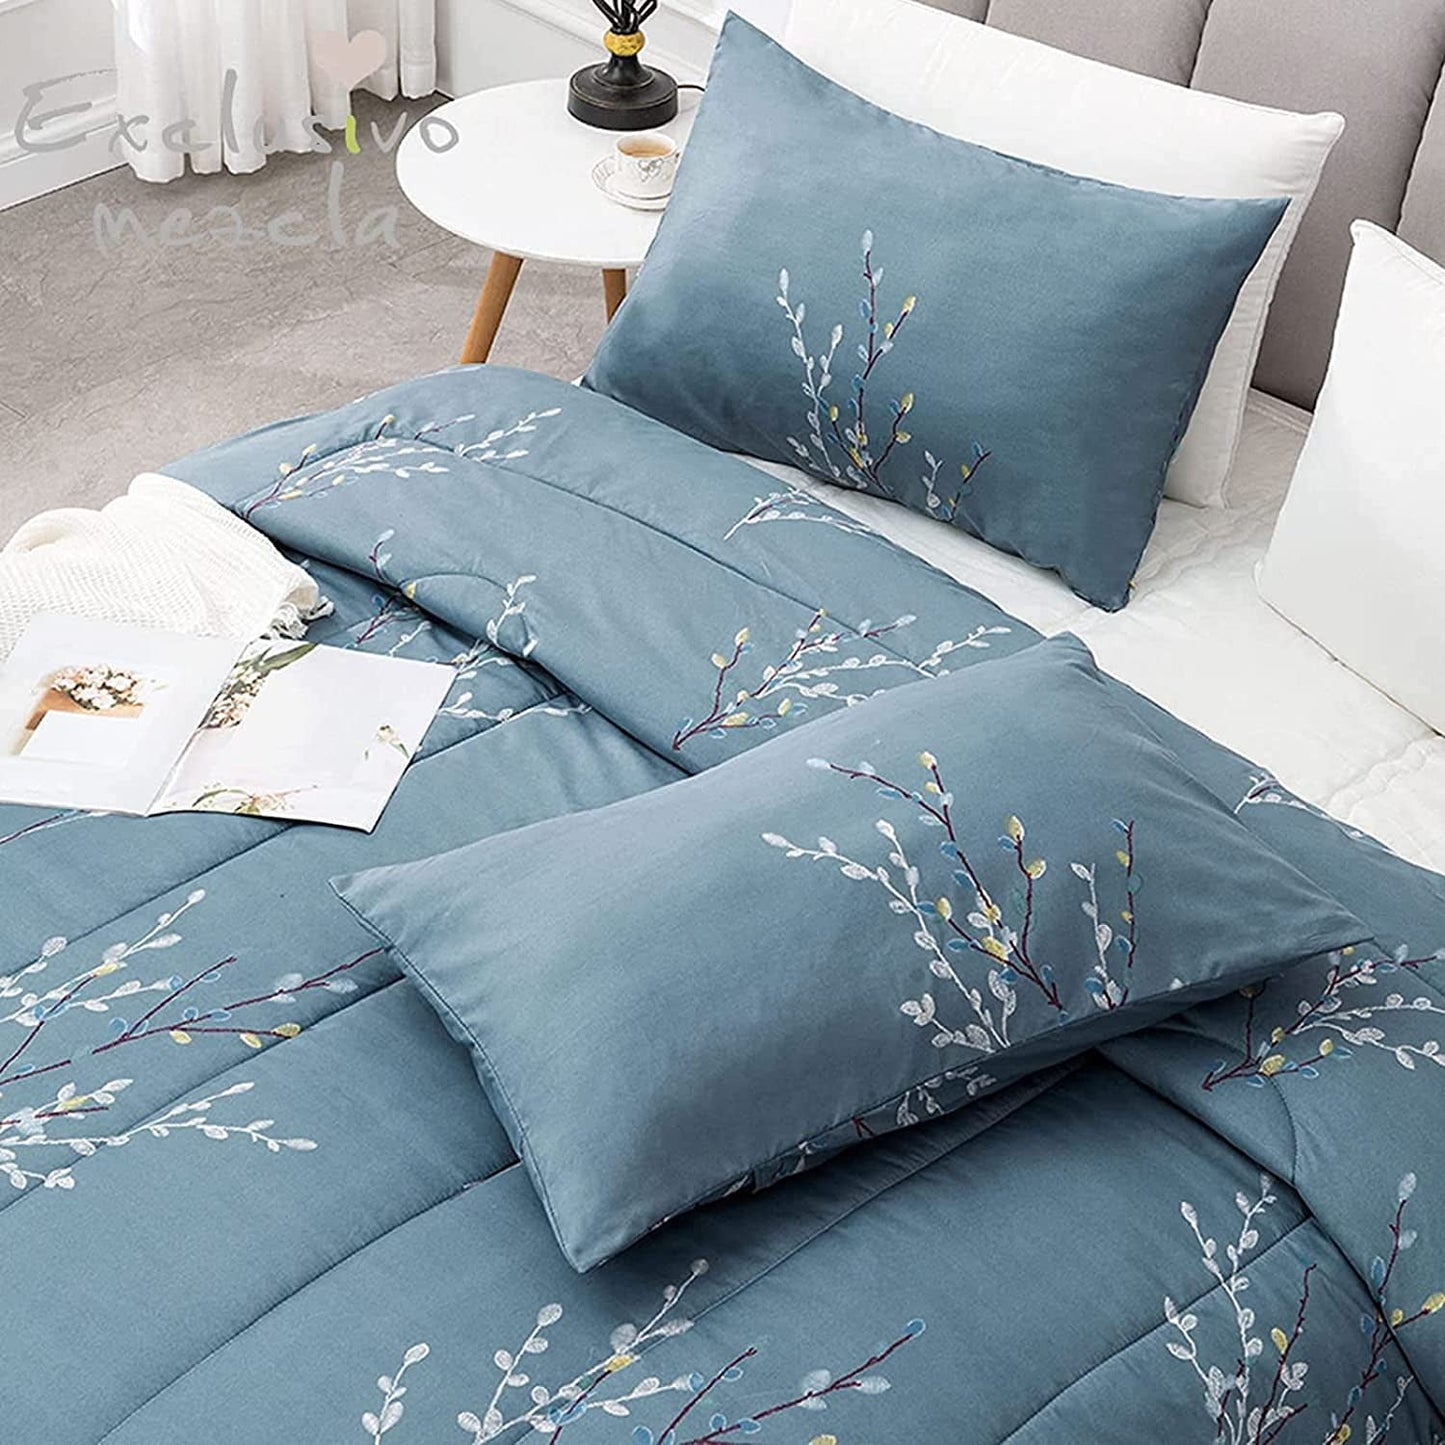 Exclusivo Mezcla 2-Piece Floral Twin Comforter Set, Microfiber Bedding Down Alternative Comforter for All Seasons with 1 Pillow Sham, Blue